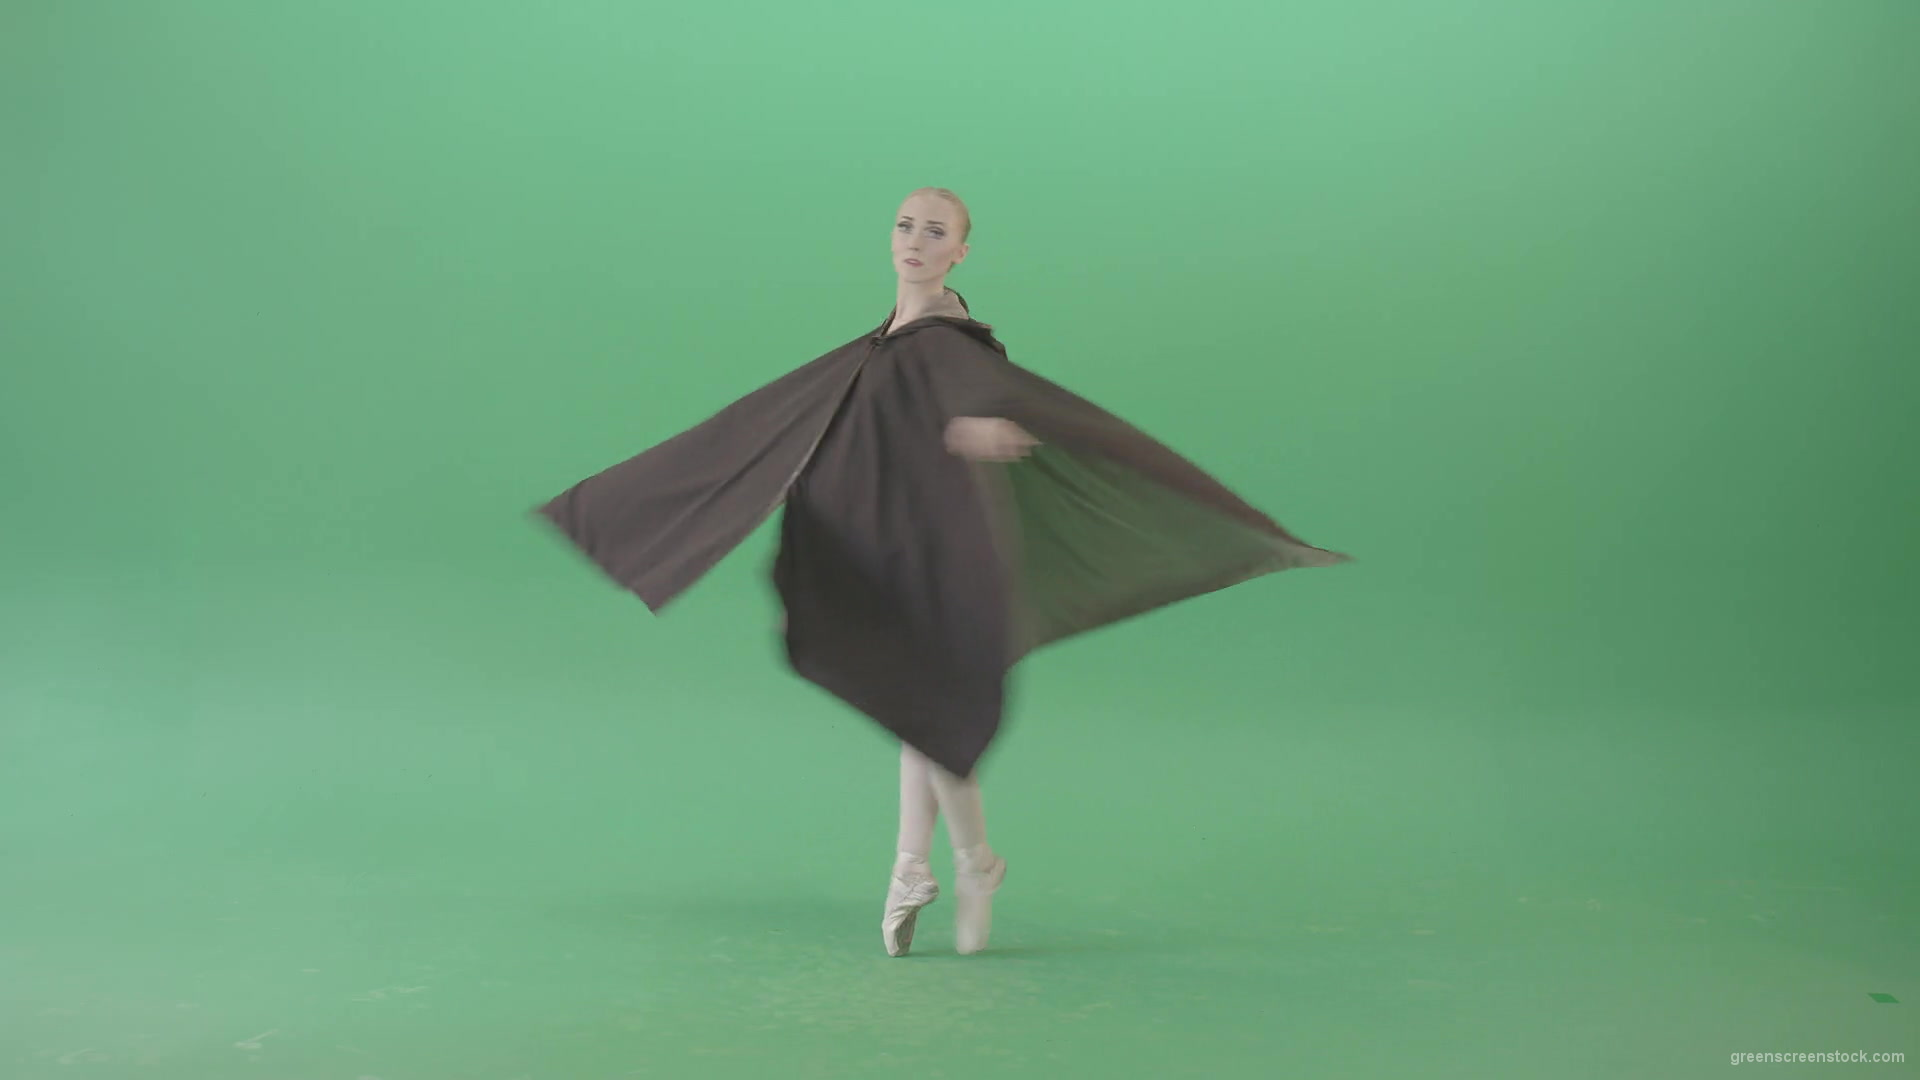 Green-Screen-Ballet-Girl-spinning-in-black-Mantle-cloak-4K-Video-Footage-1920_004 Green Screen Stock